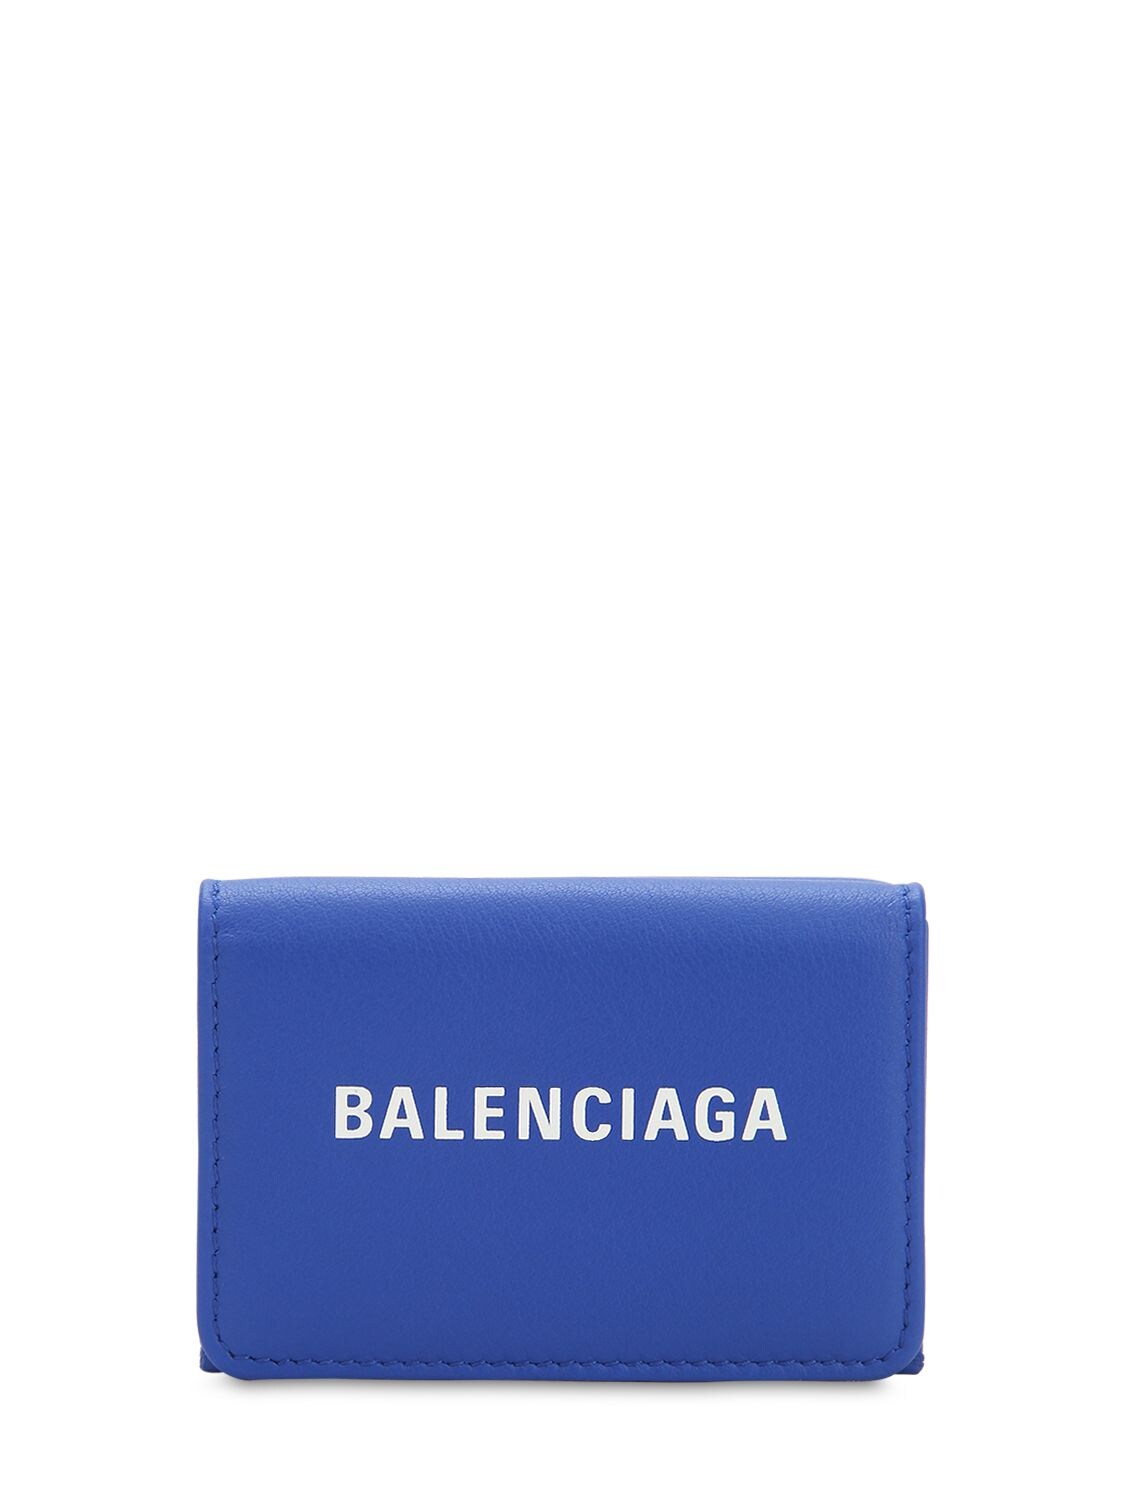 Balenciaga 皮革迷你钱包 In Royal Blue